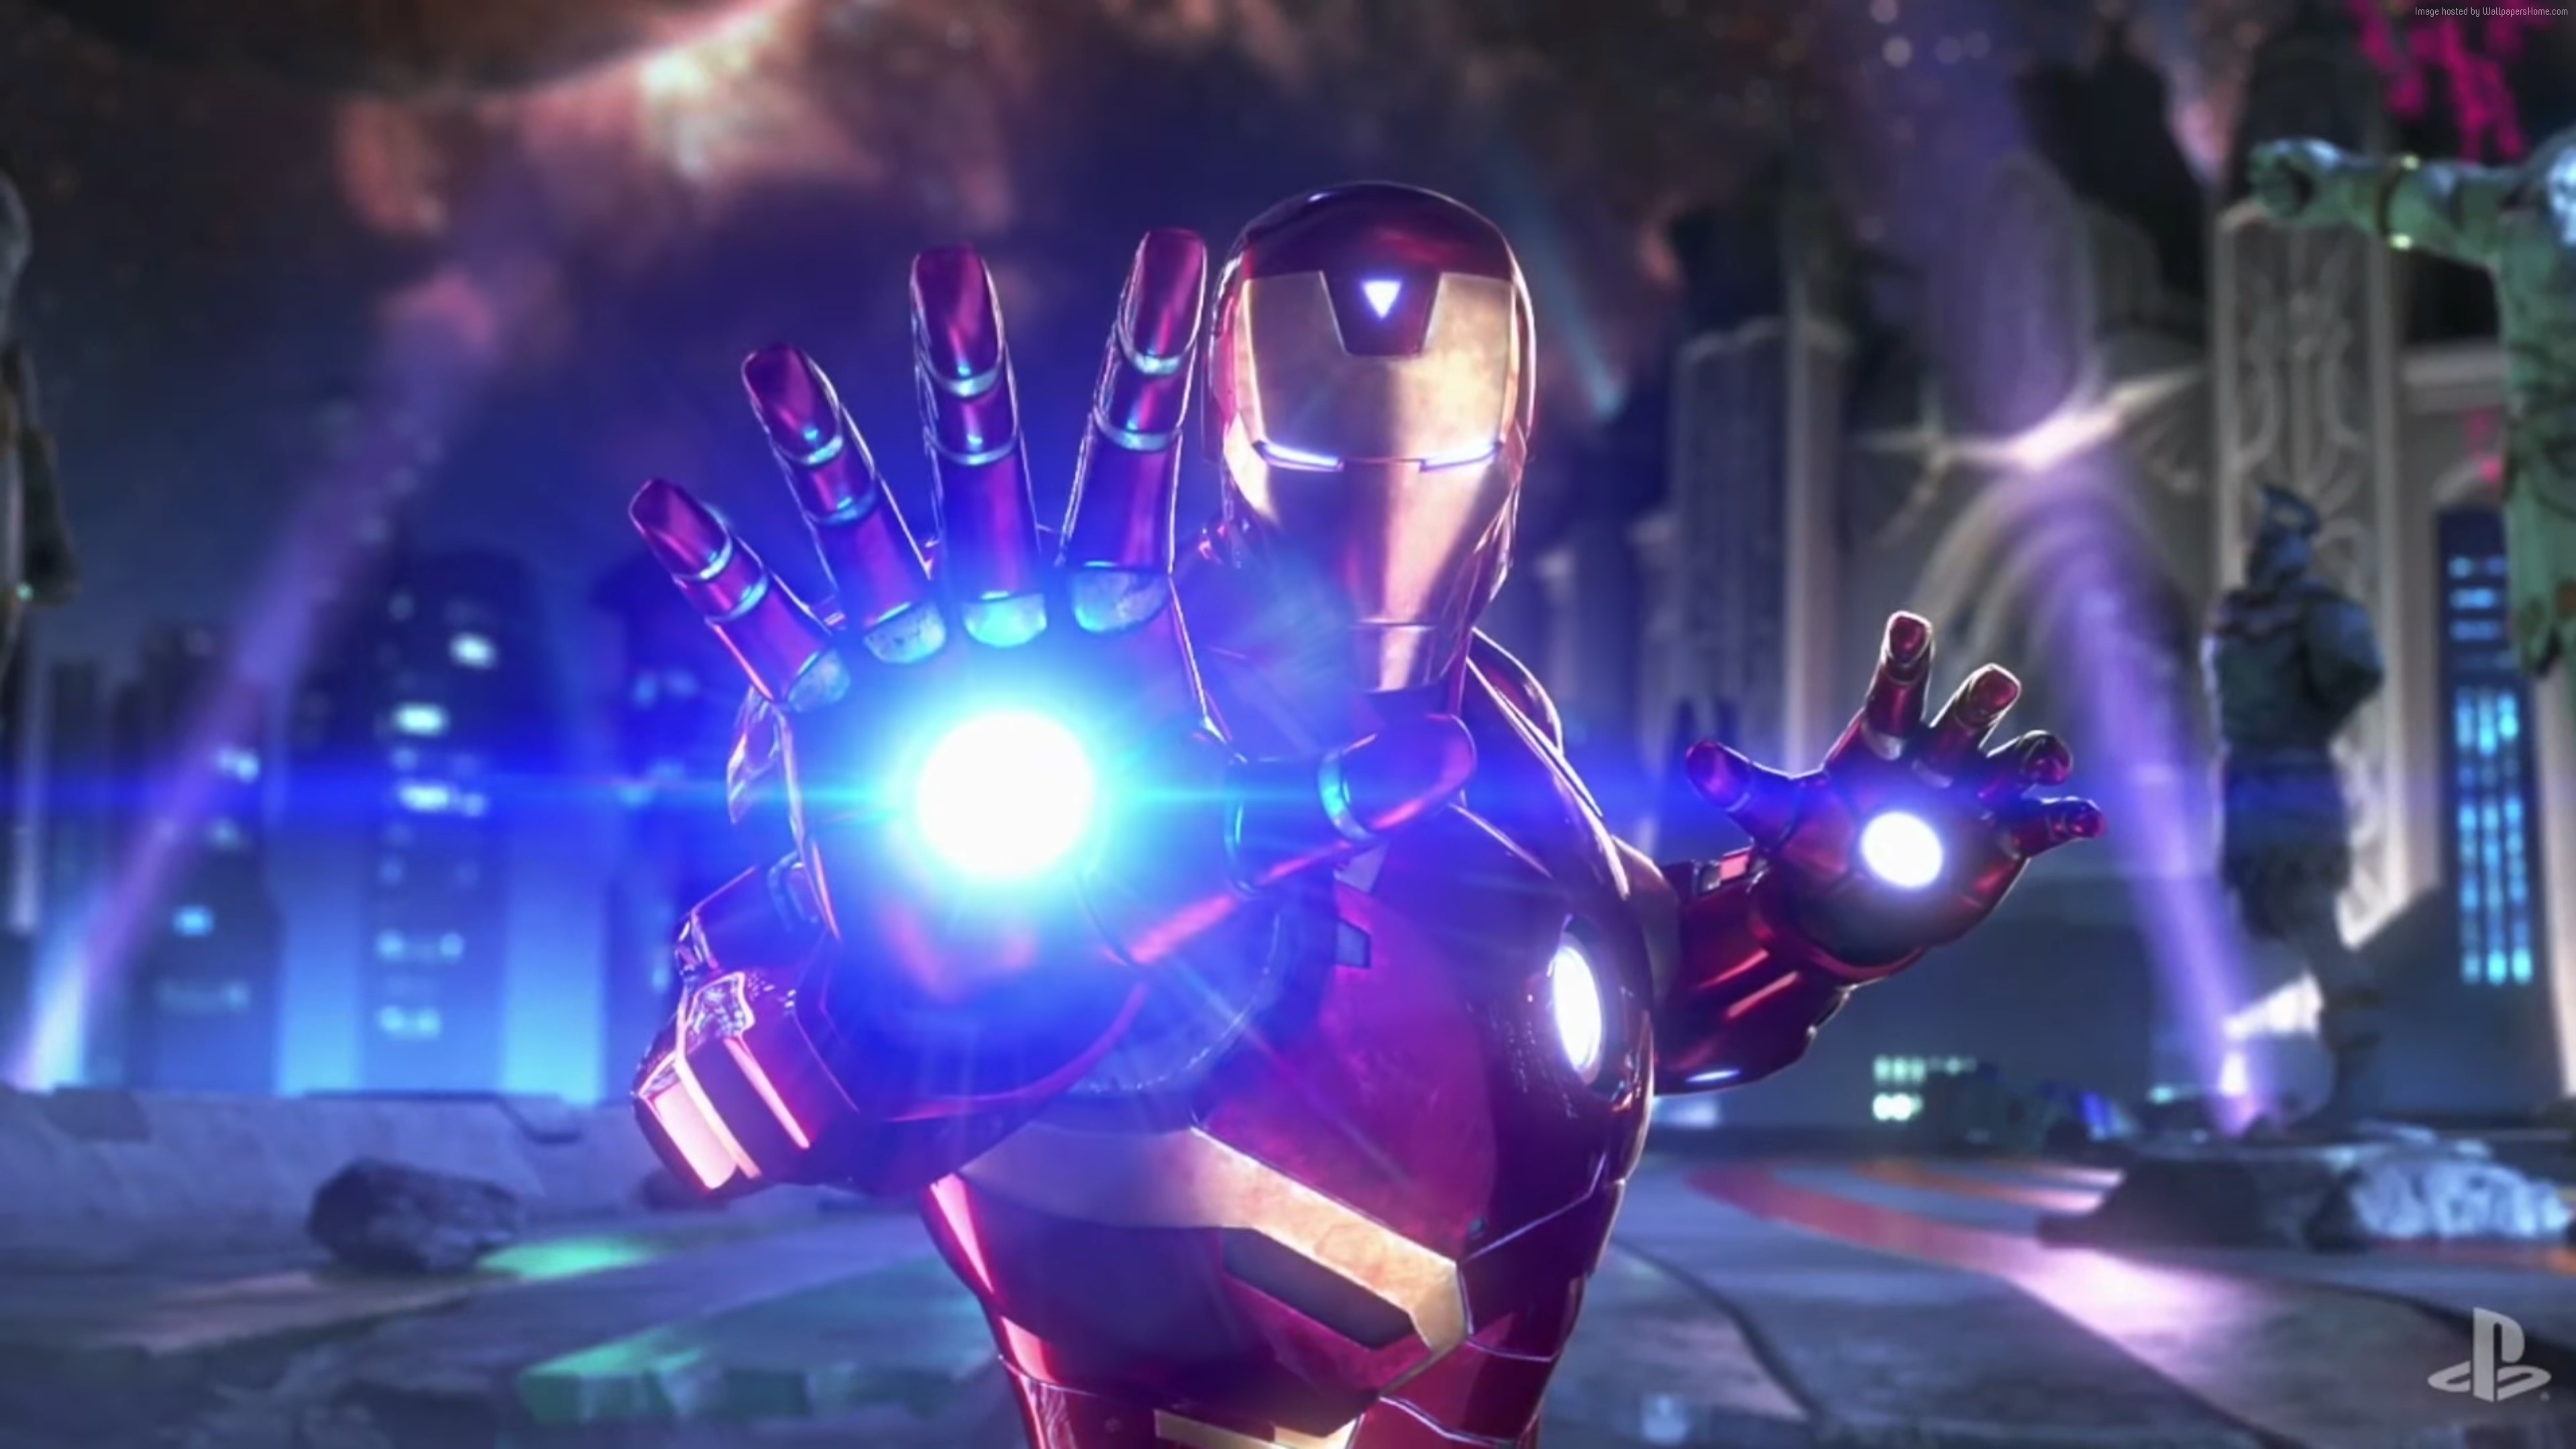 Marvel Vs Infinite Screenshot 4k E3